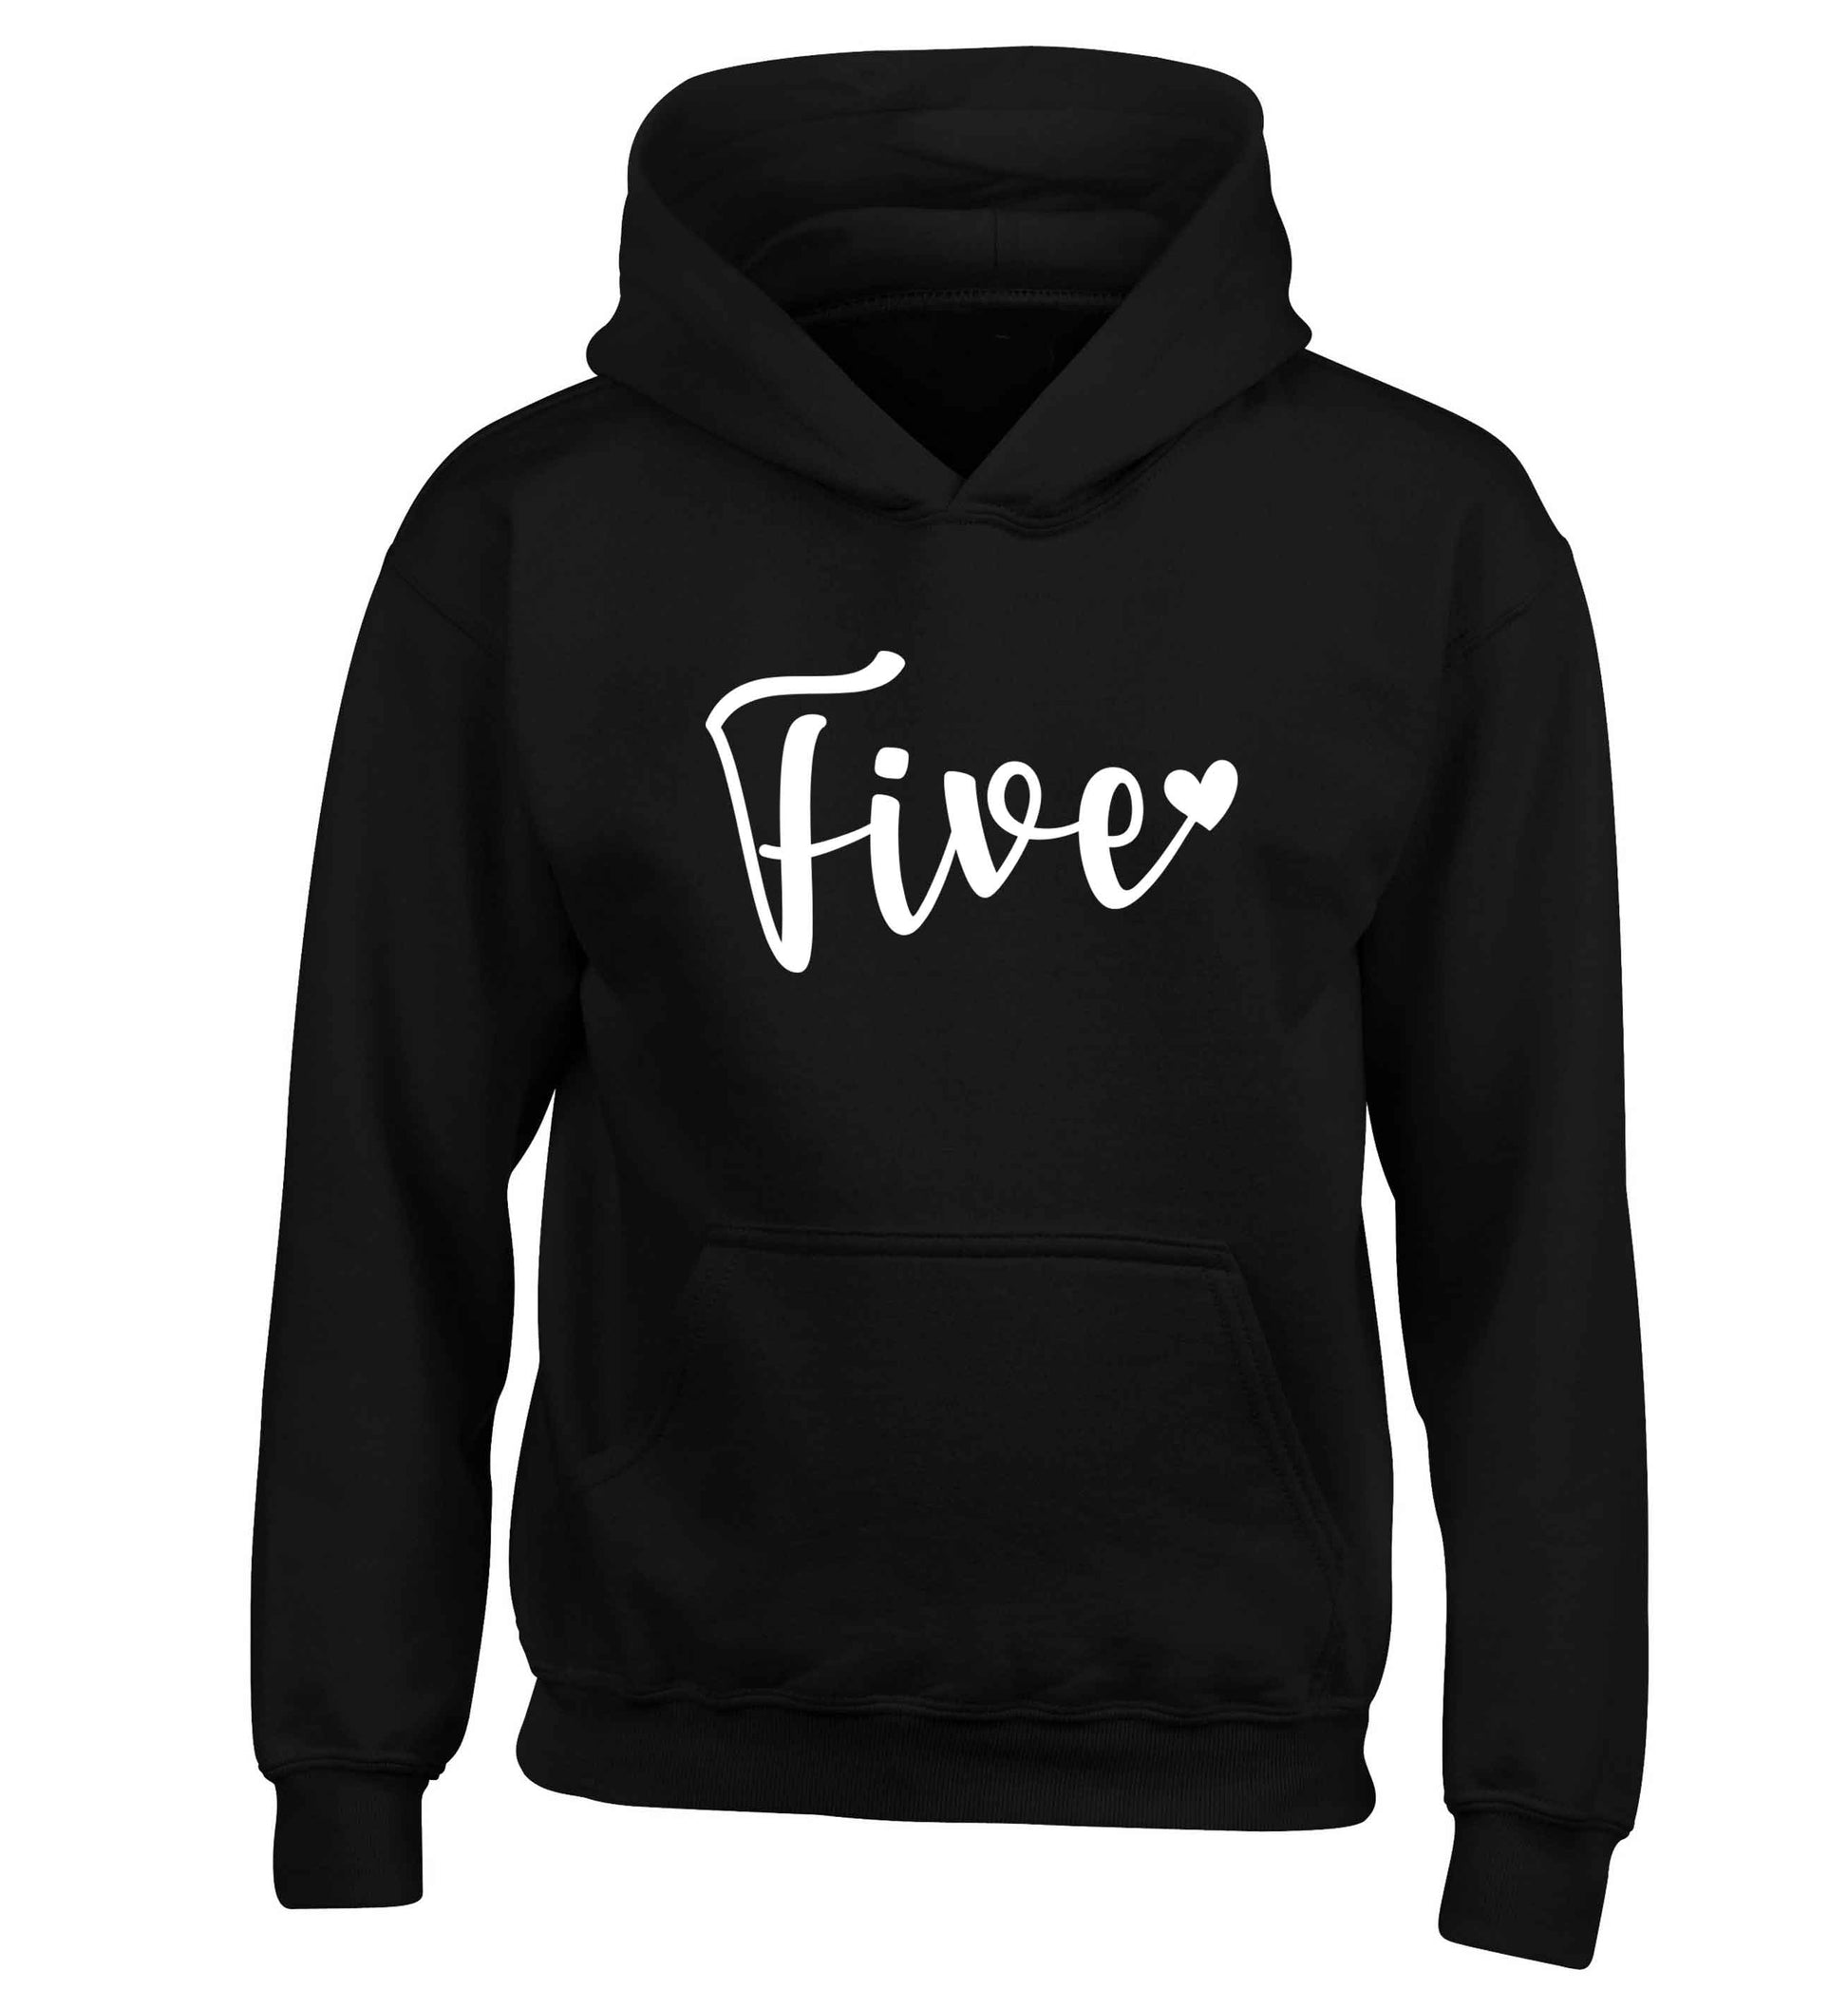 Five and heart children's black hoodie 12-13 Years